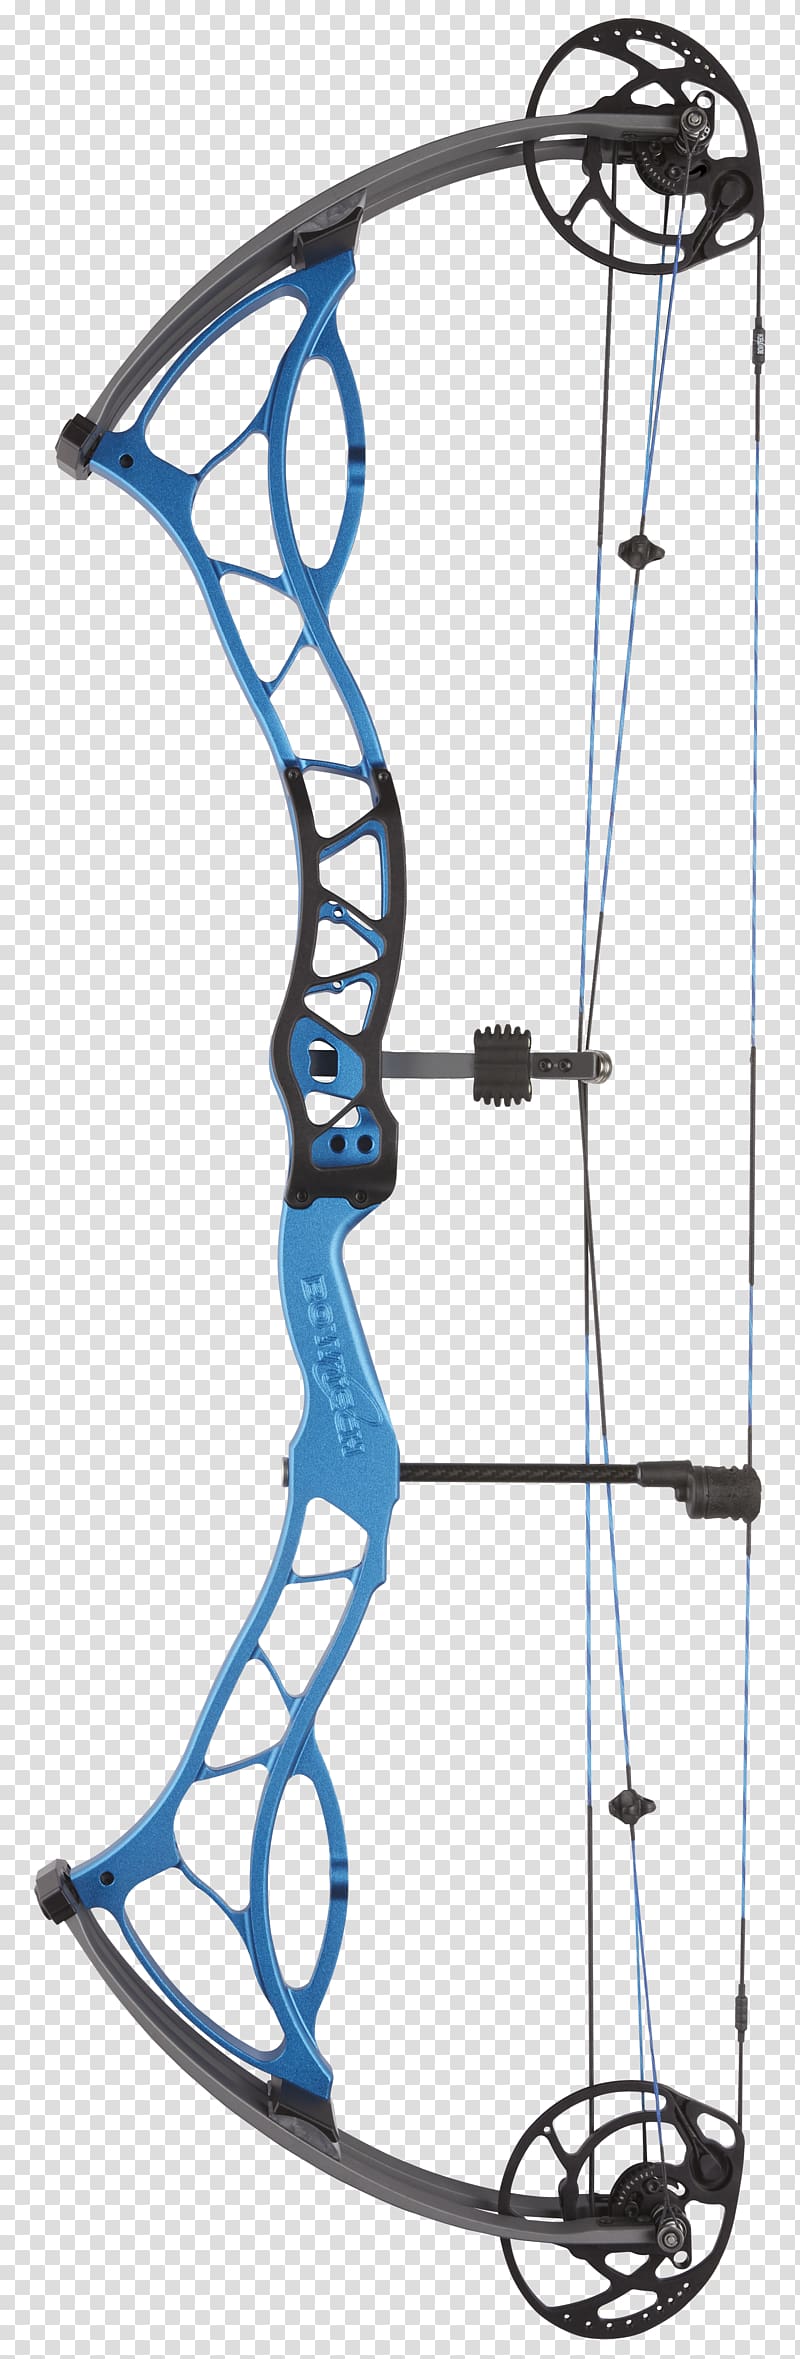 BowTech Archery Compound Bows Bow and arrow Crossbow, archery transparent background PNG clipart